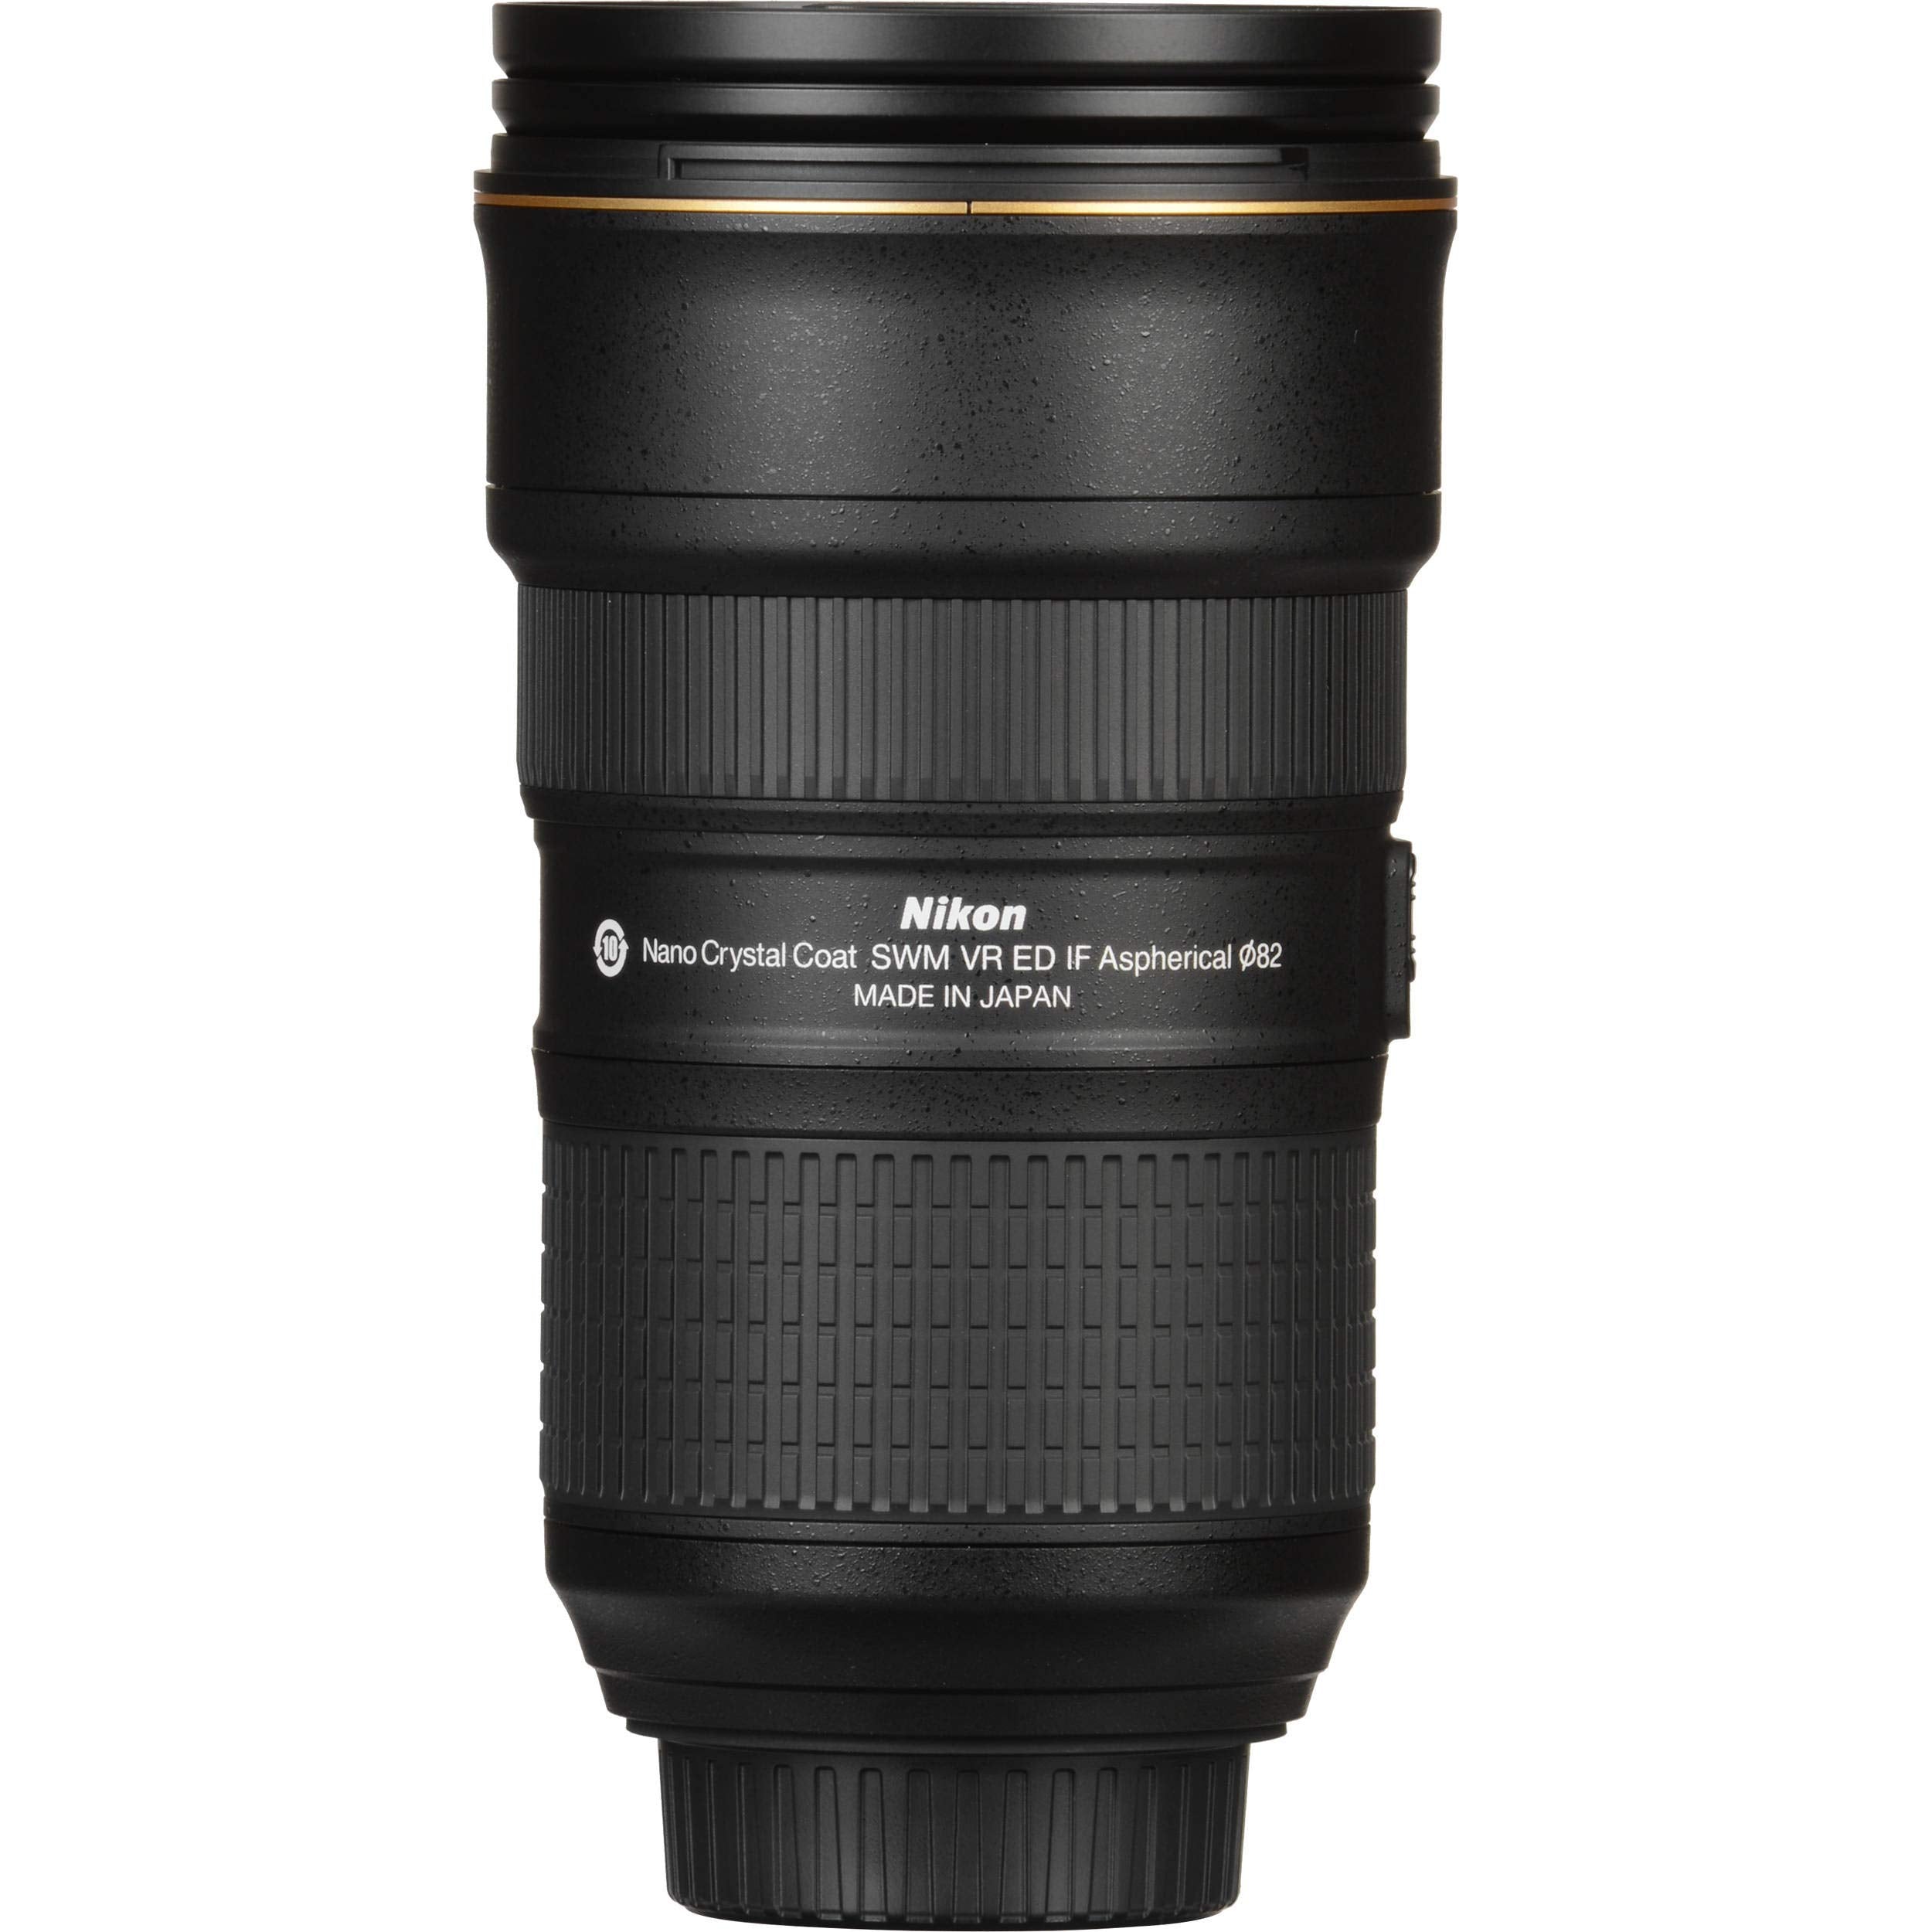 Nikon AF-S NIKKOR 24-70mm f/2.8E ED VR (Intl Model) + 8 Inch Vivitar Premium Lens Case + 3pcs UV Lens Filter Kit + Cleaning Kit